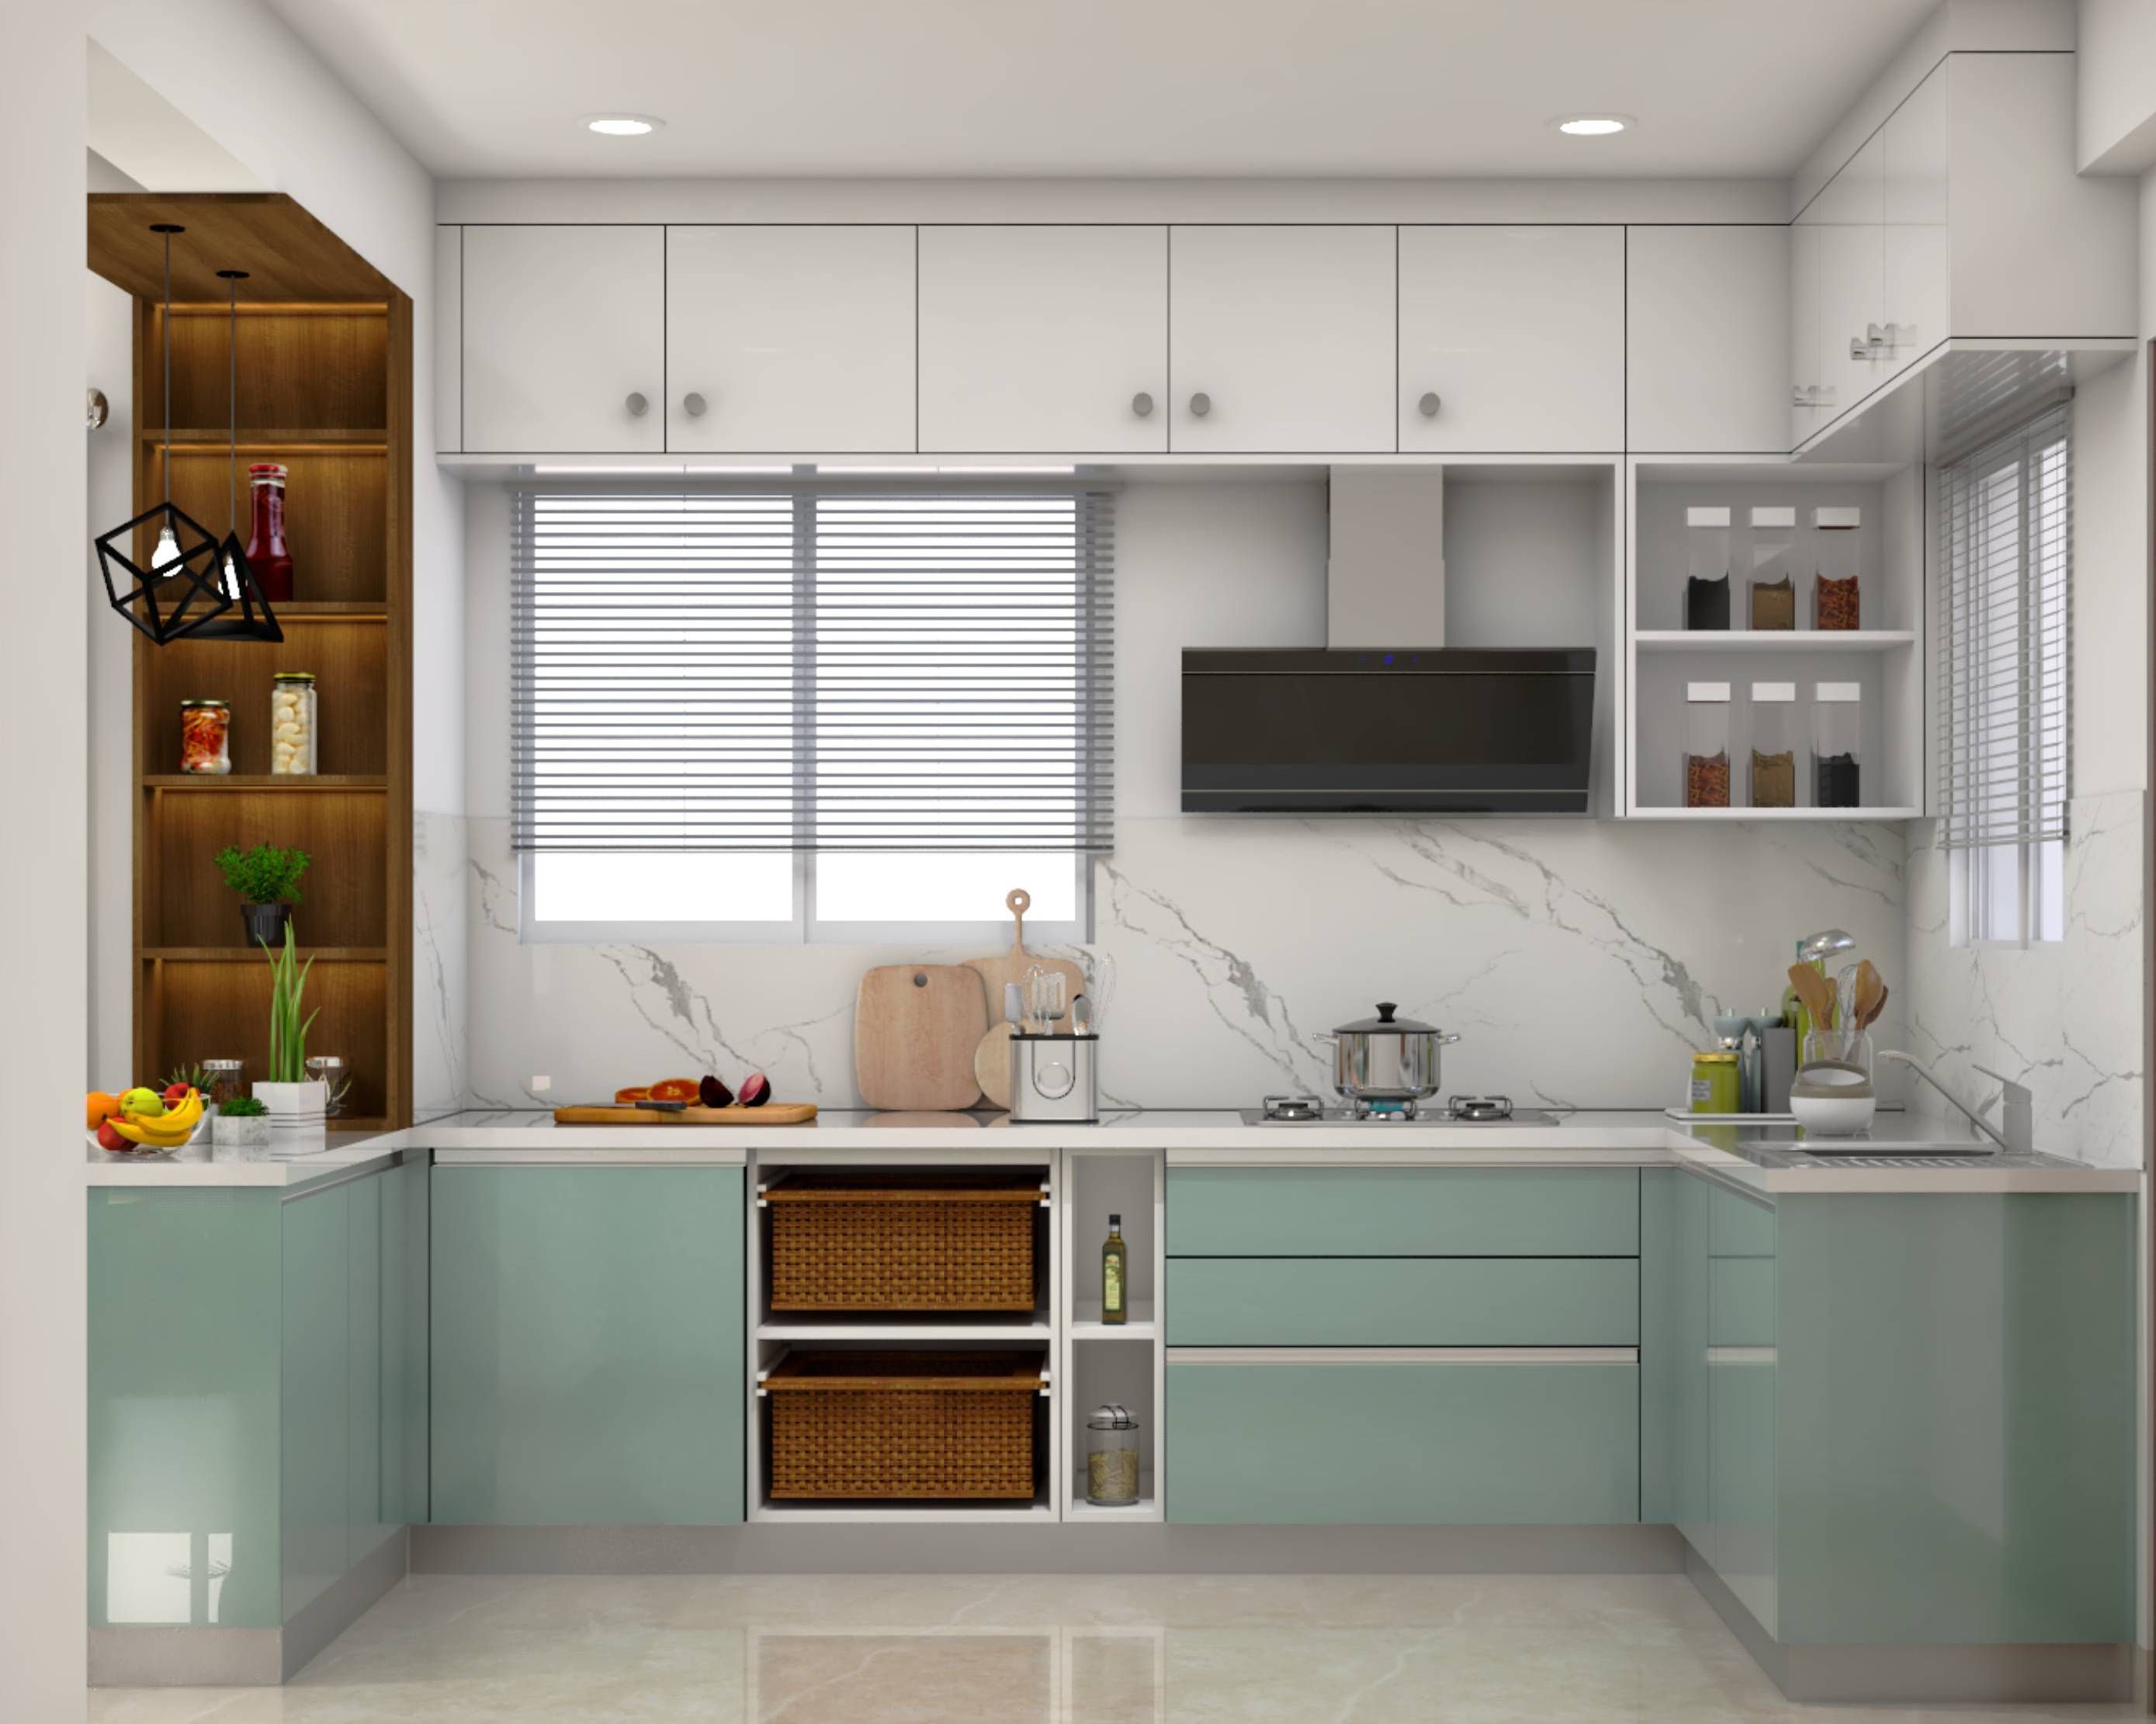 Spacious Modular U-Shaped Kitchen Design With Pastel Blue Cabinet